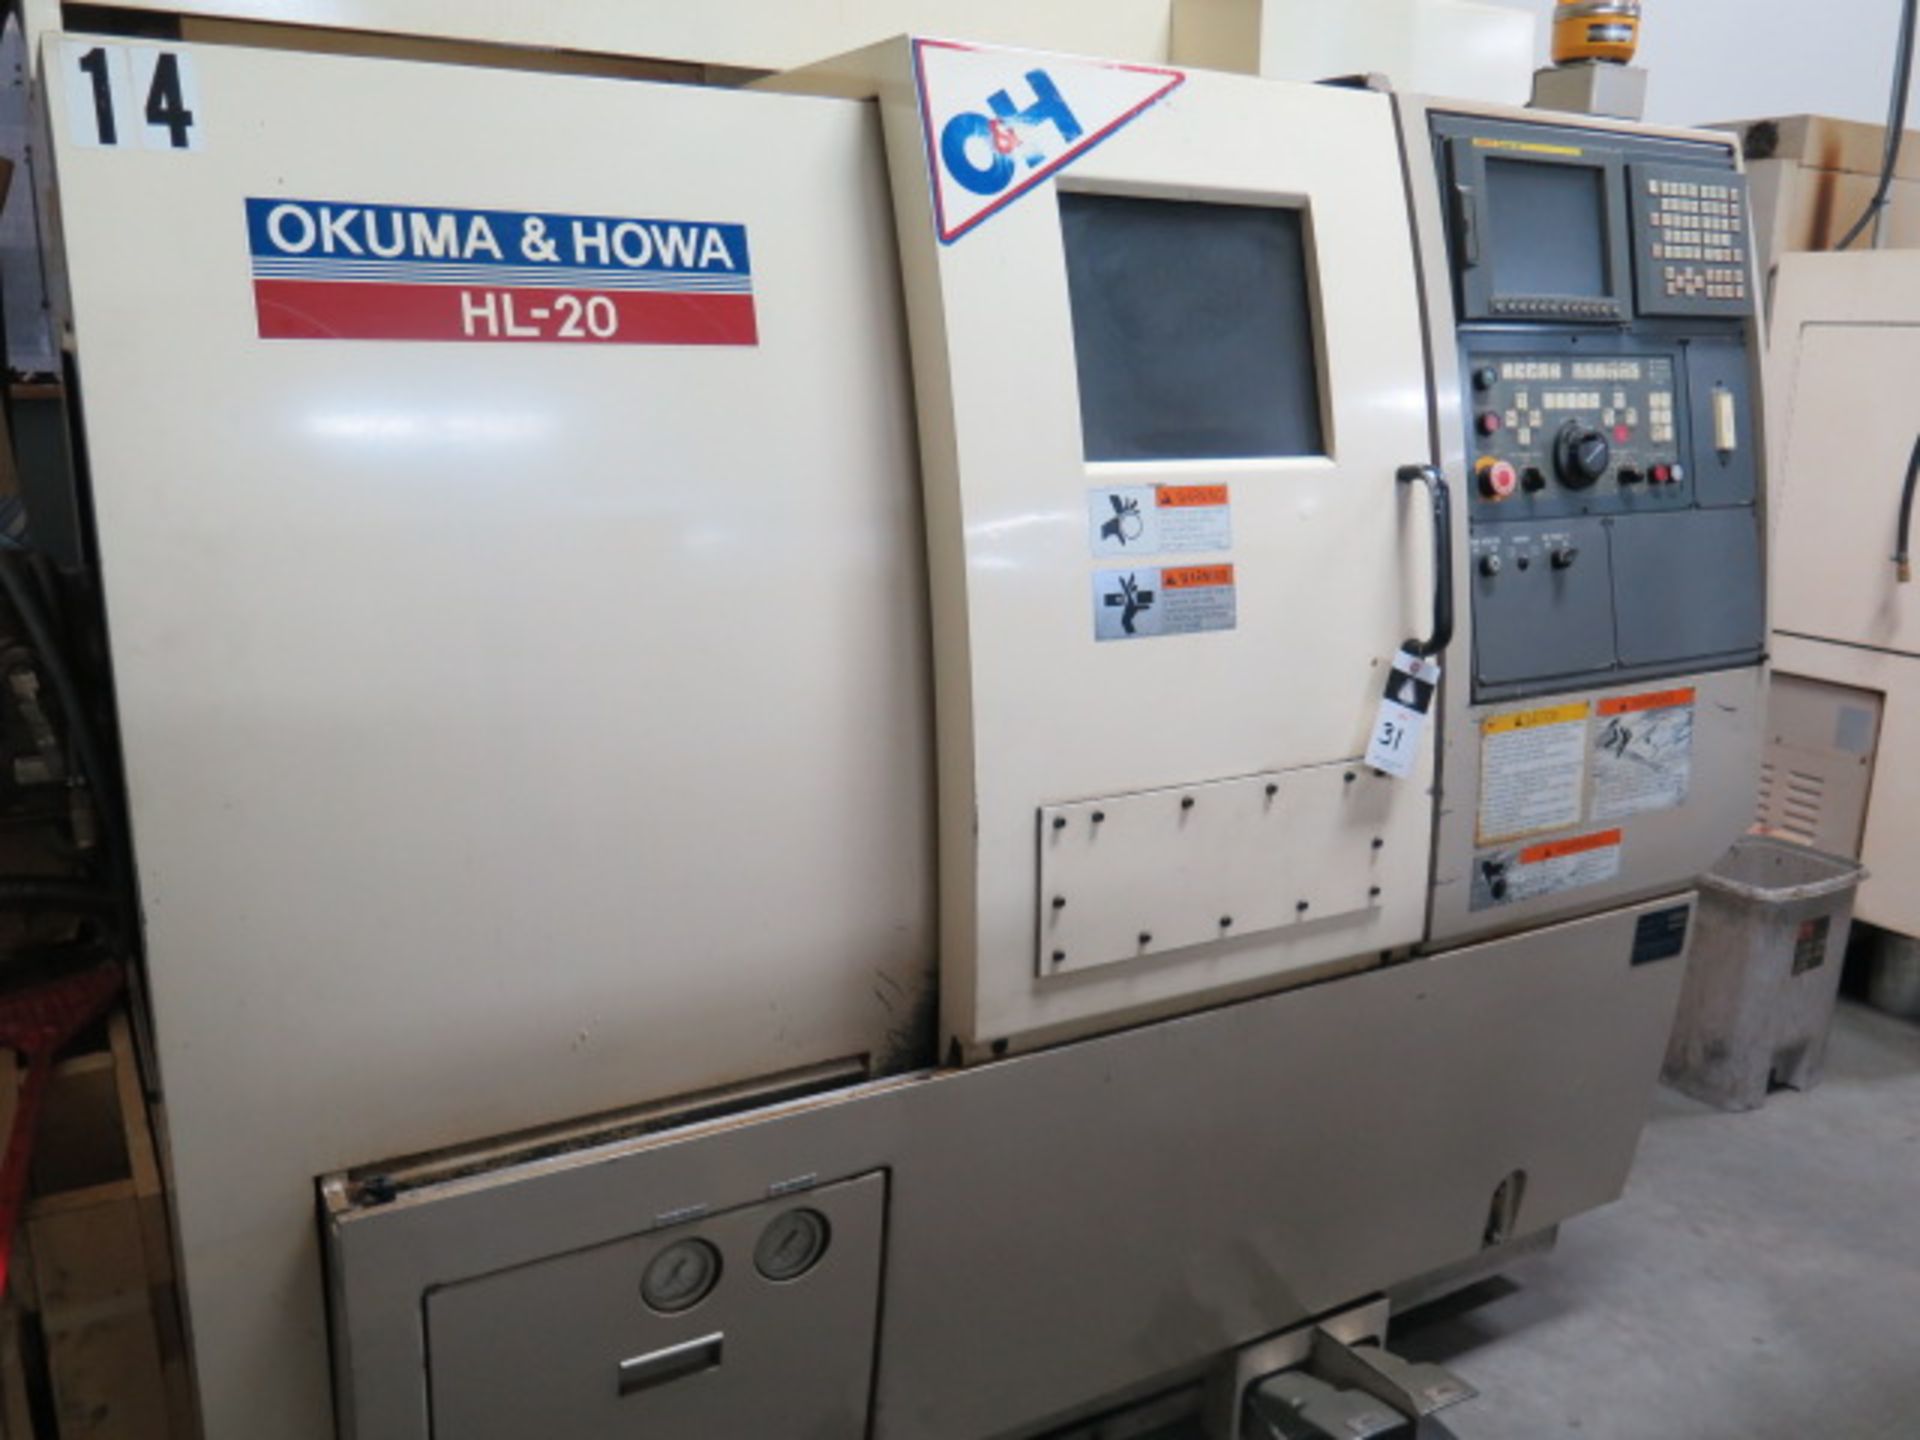 Okuma & Howa HL-20 CNC Turning Center s/n 00888 w/ Fanuc 18i-T Controls, 12-Station, SOLD AS IS - Image 3 of 12